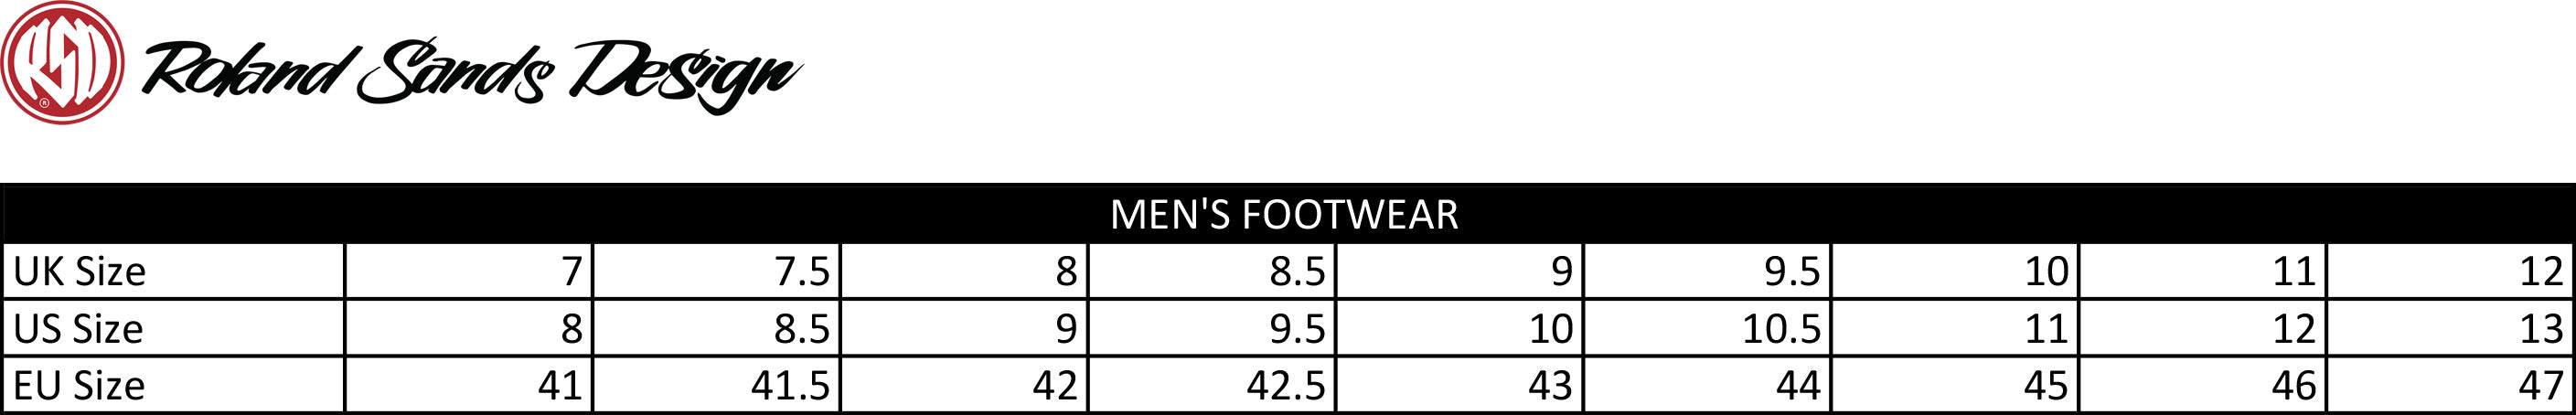 Roland Sands Design Footwear Size Chart - Salt Flats Clothing